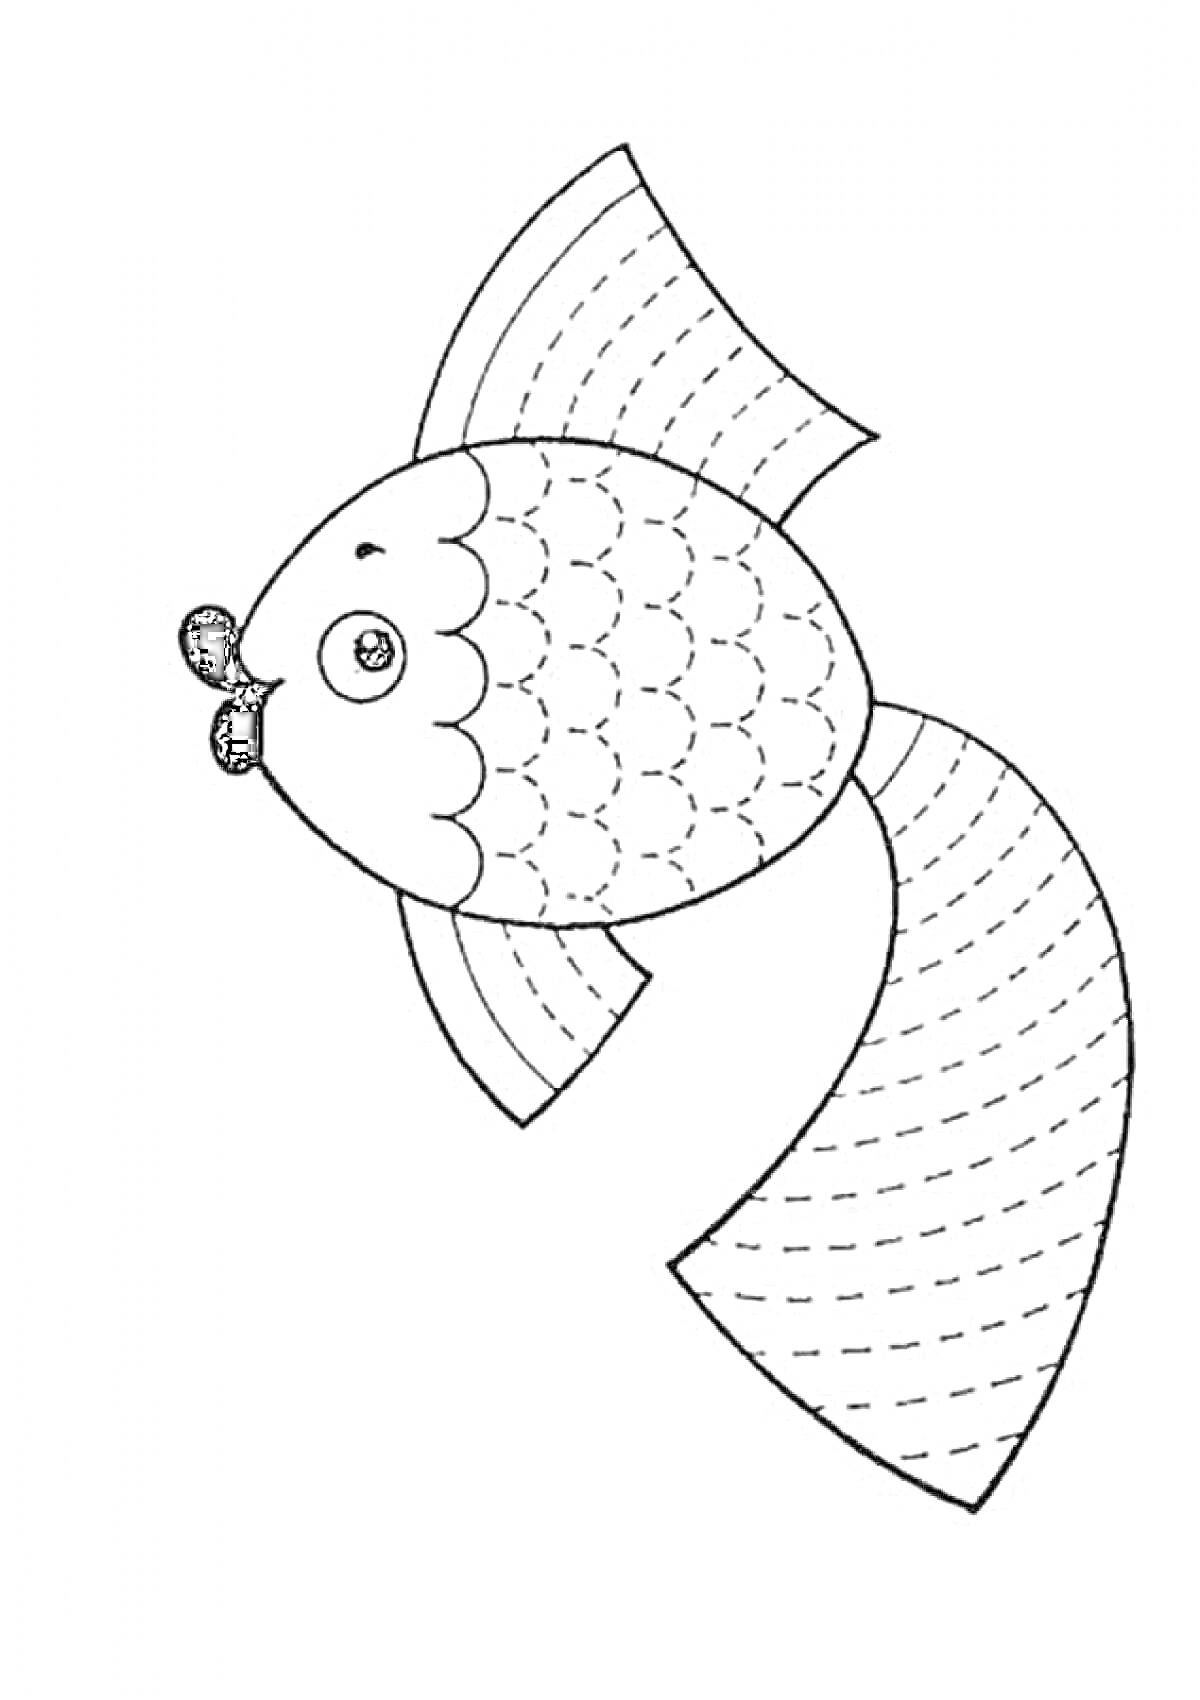 Раскраска Рыбка с узорами штриховки на хвосте и плавниках